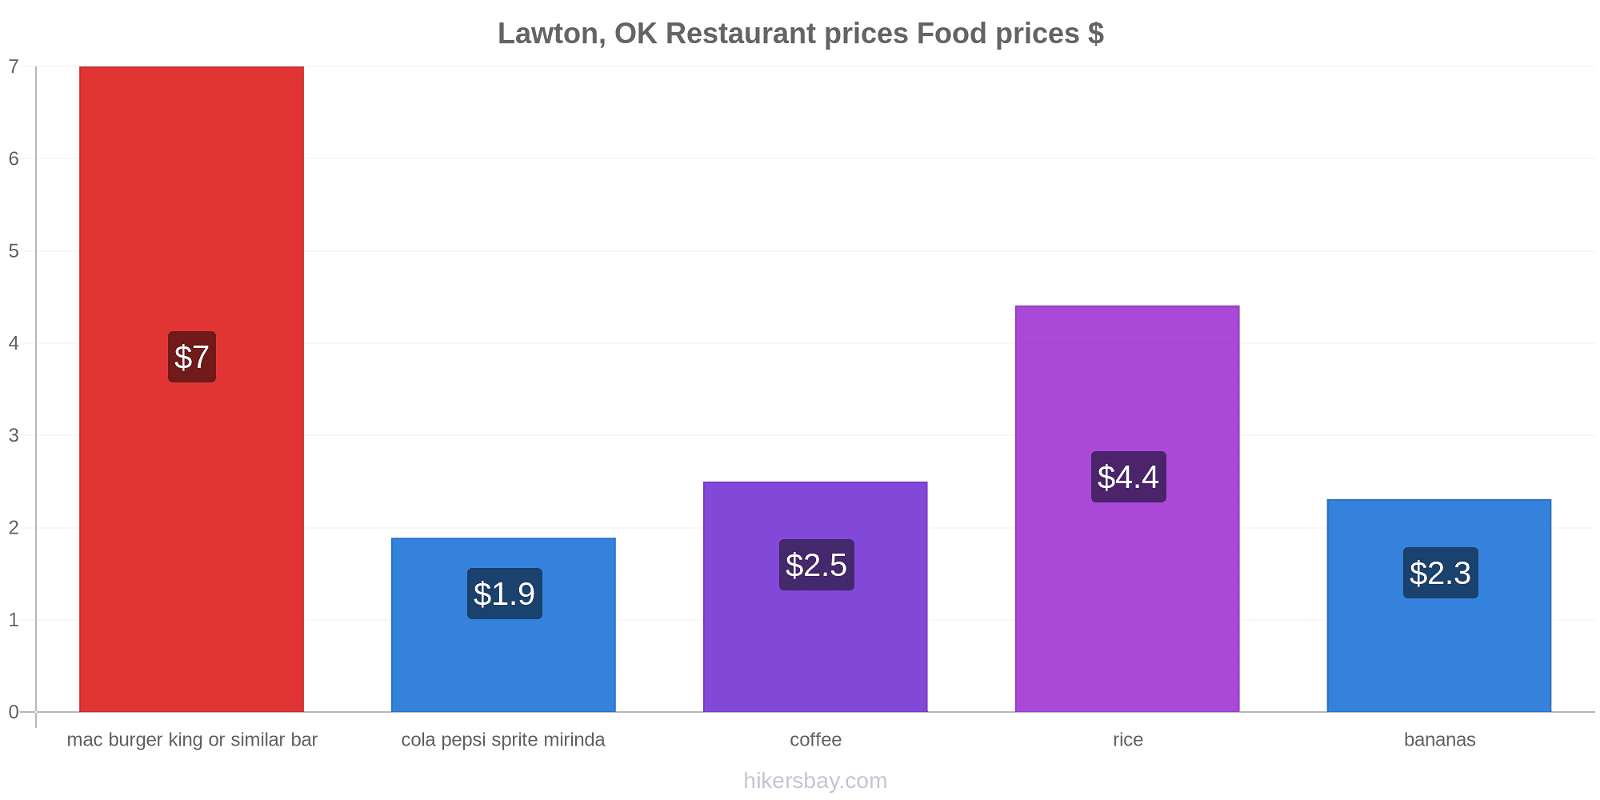 Lawton, OK price changes hikersbay.com